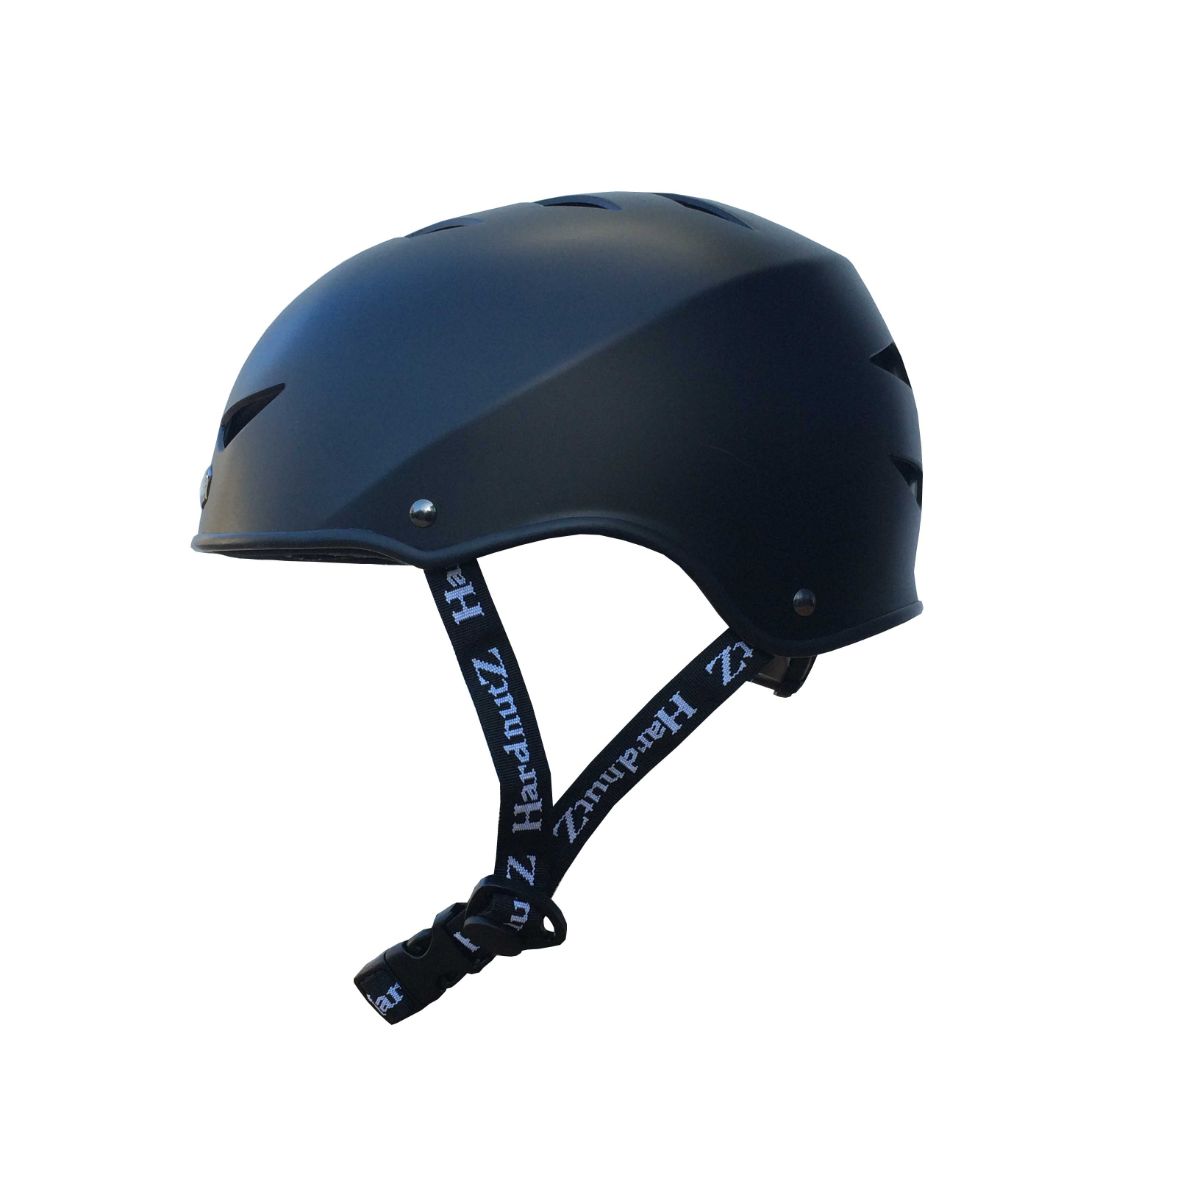 HardnutZ Rubber Street Helmet